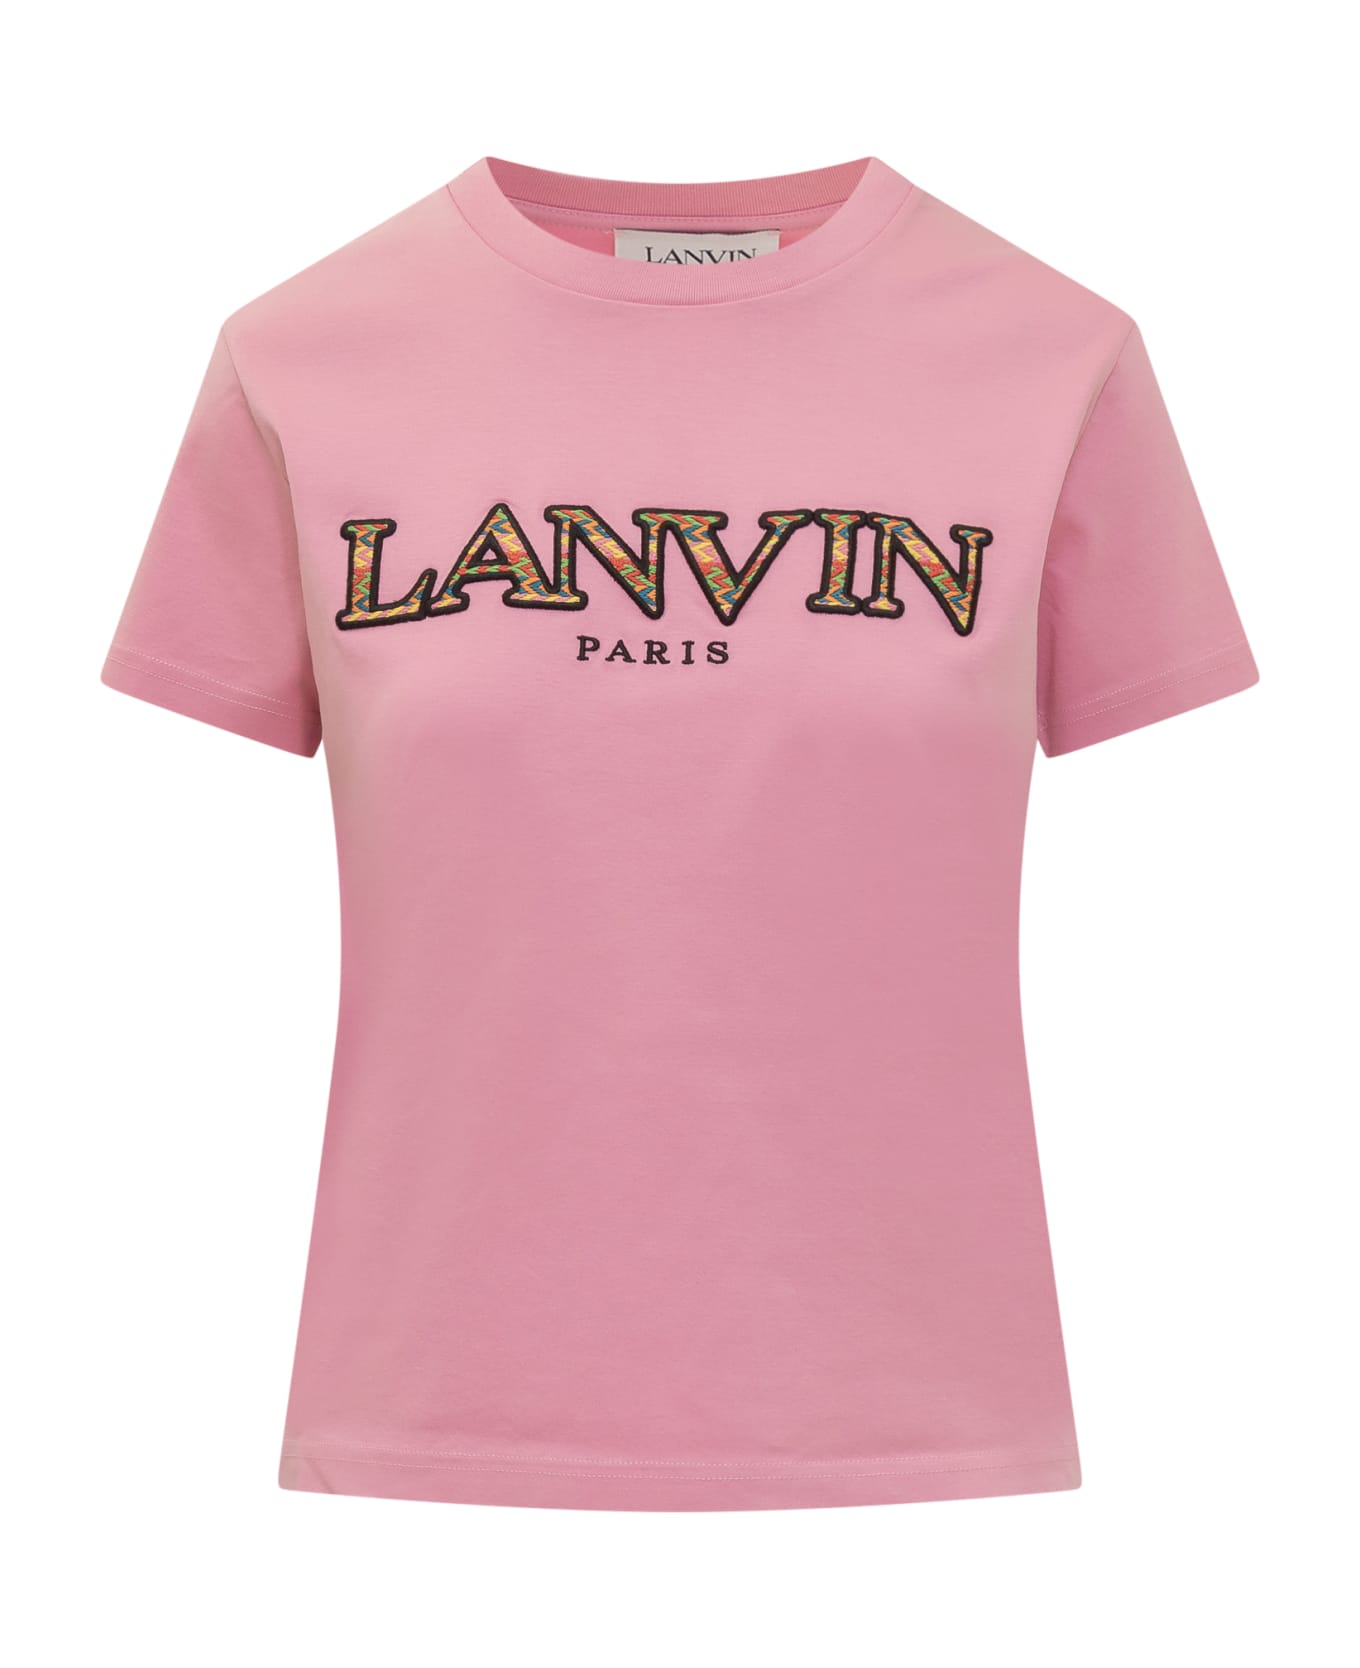 Lanvin Curb T-shirt - Peony Pink Tシャツ